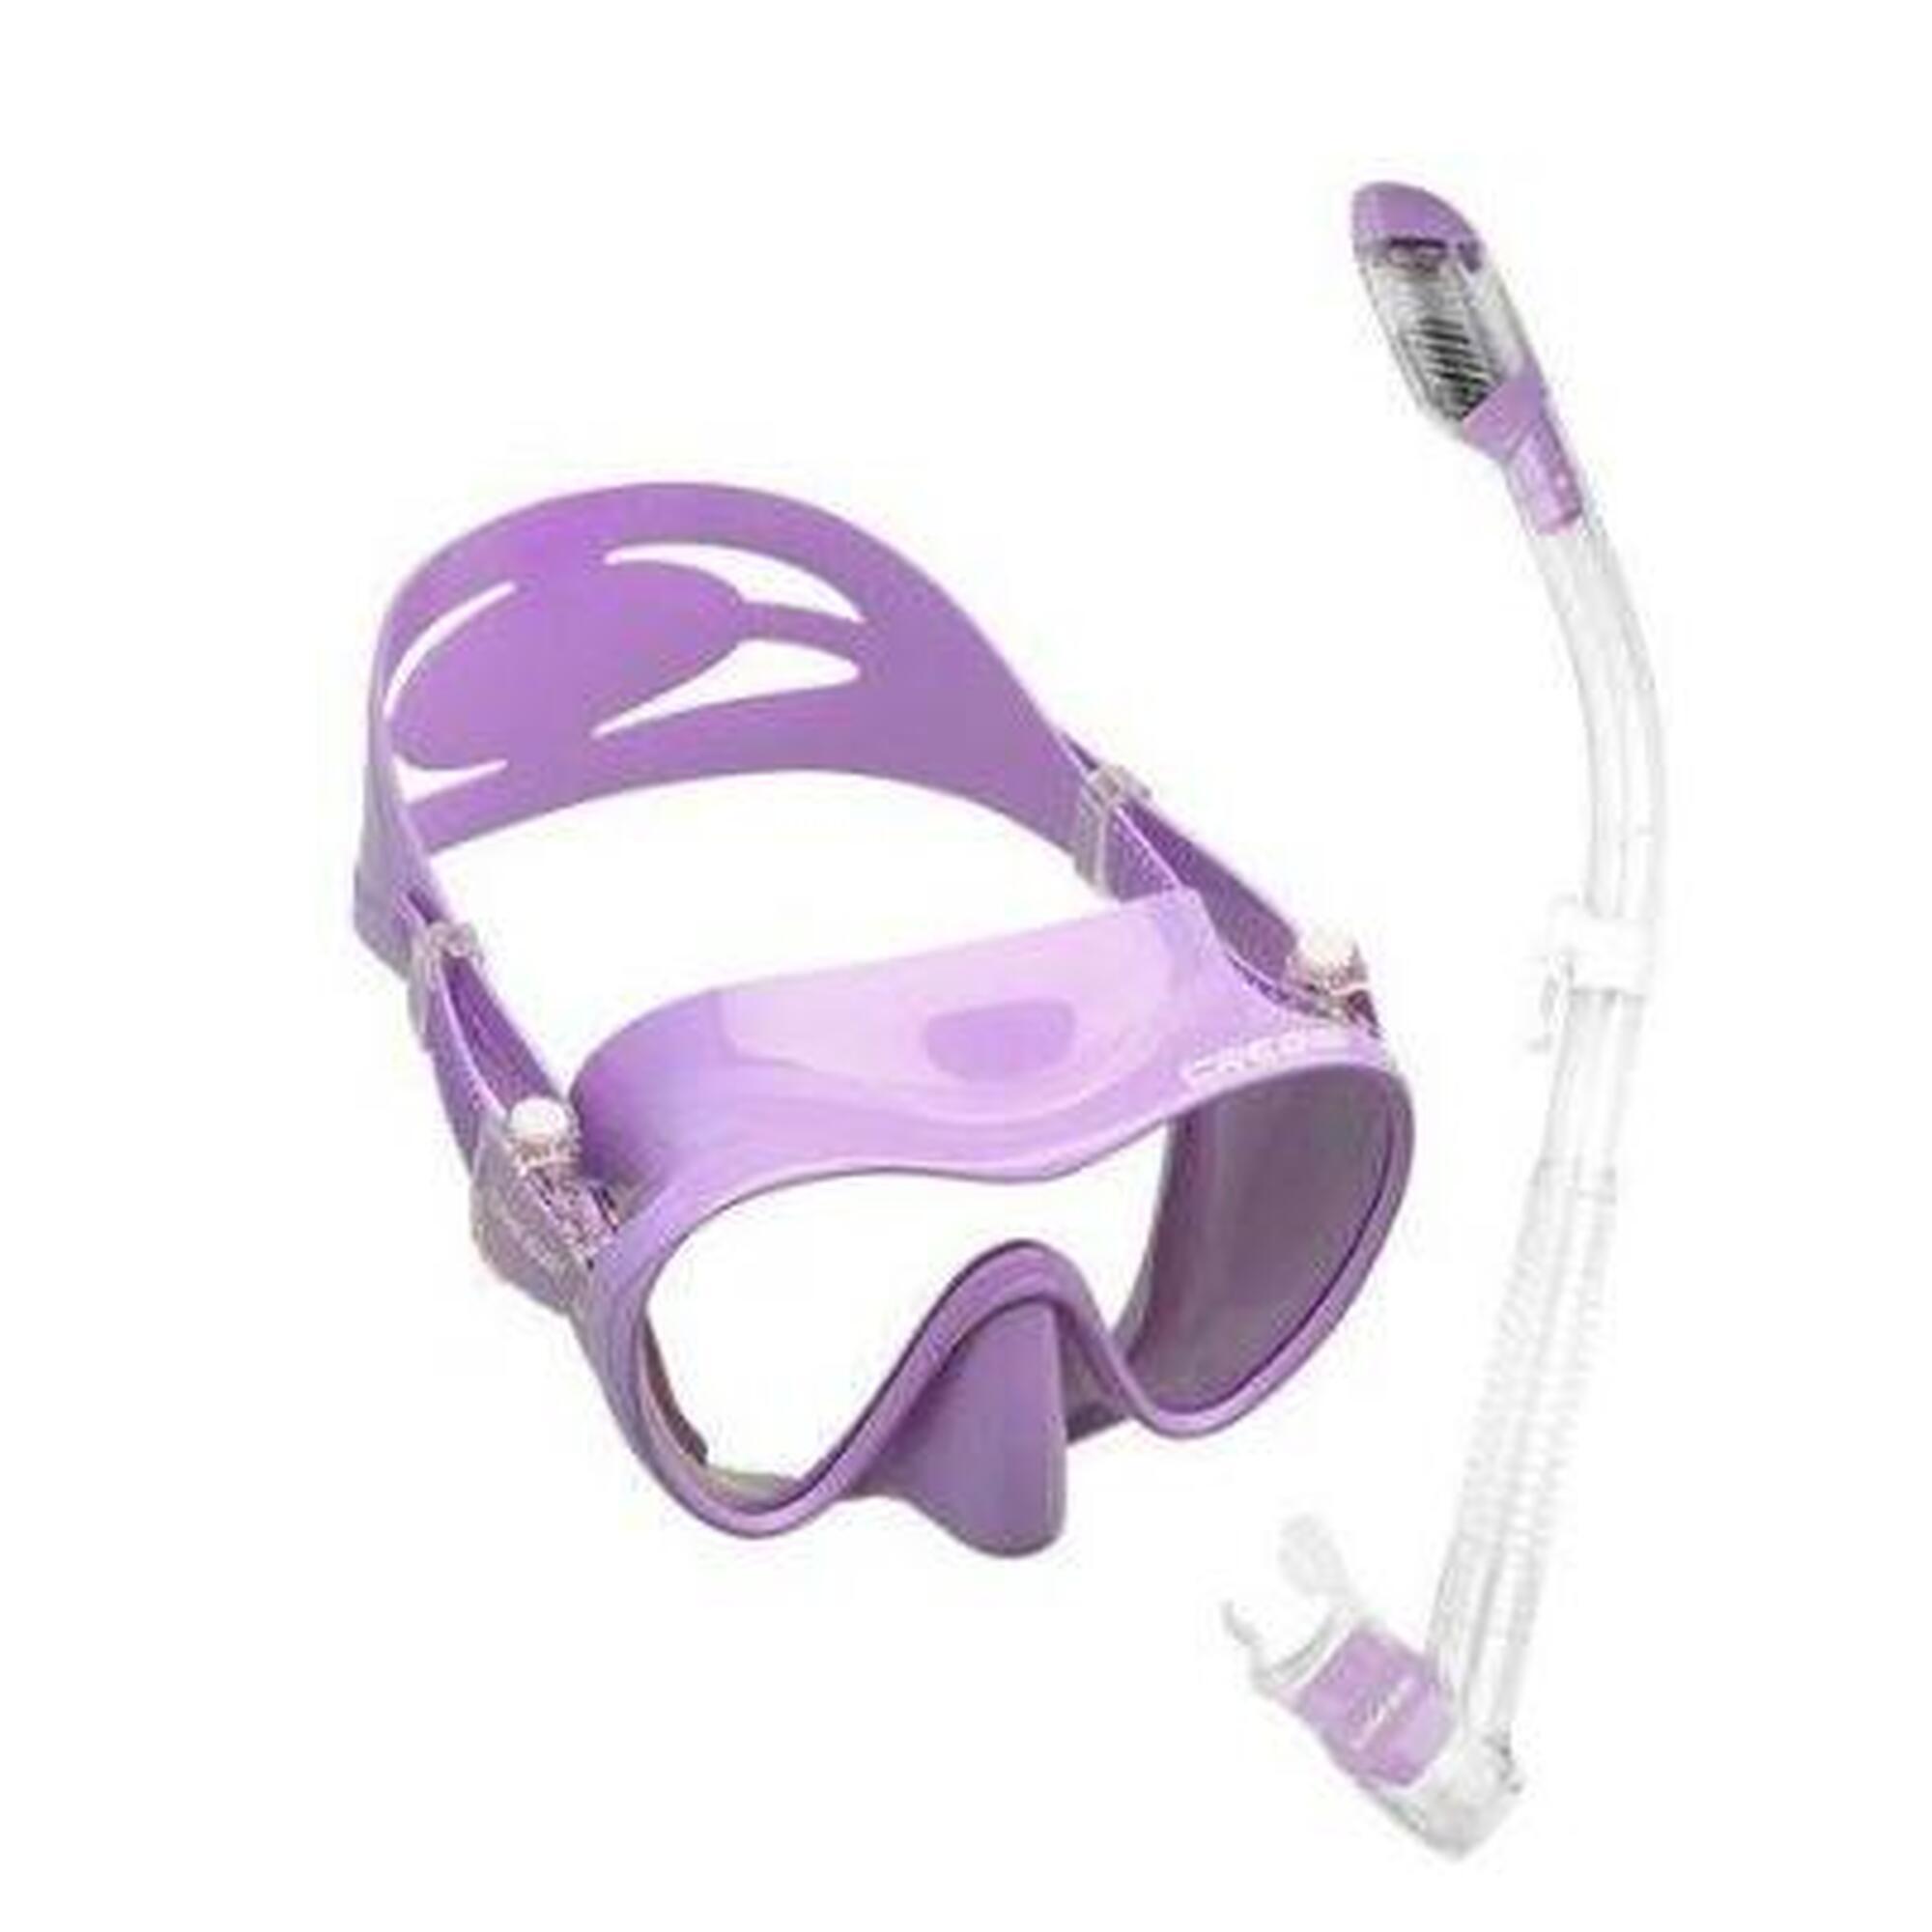 F1 Frameless mask + Dry Snorkel Combo - Purple